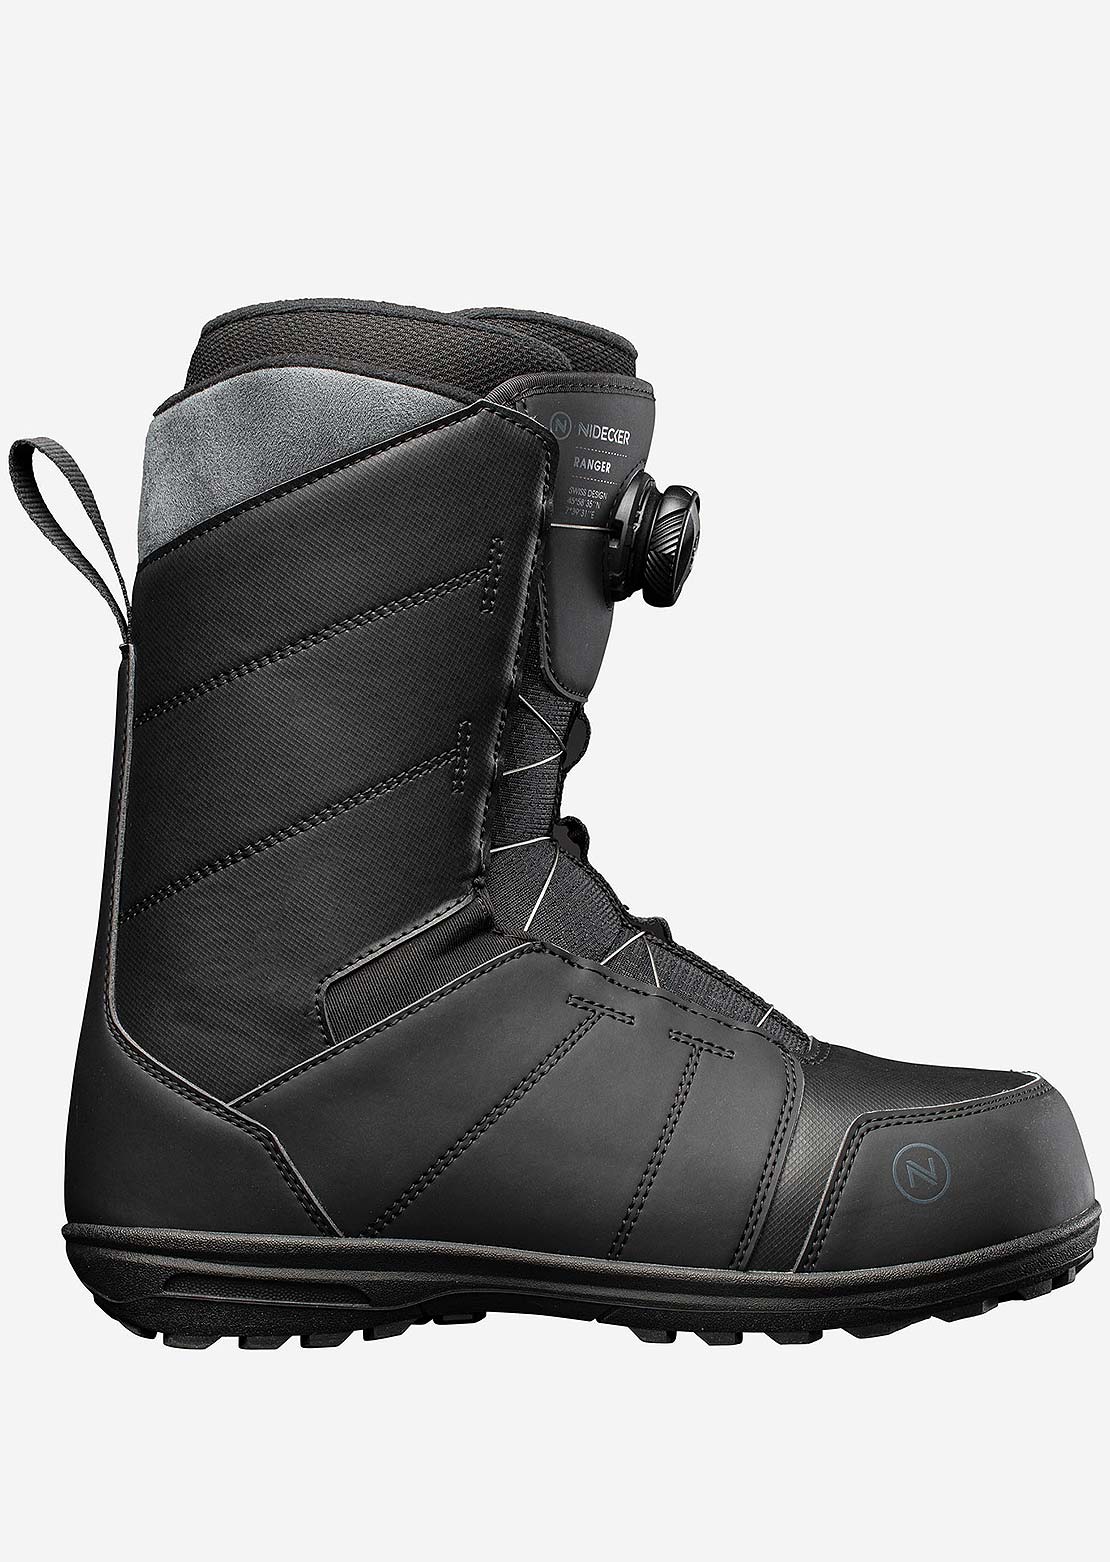 Nidecker Ranger Snow Boots Black